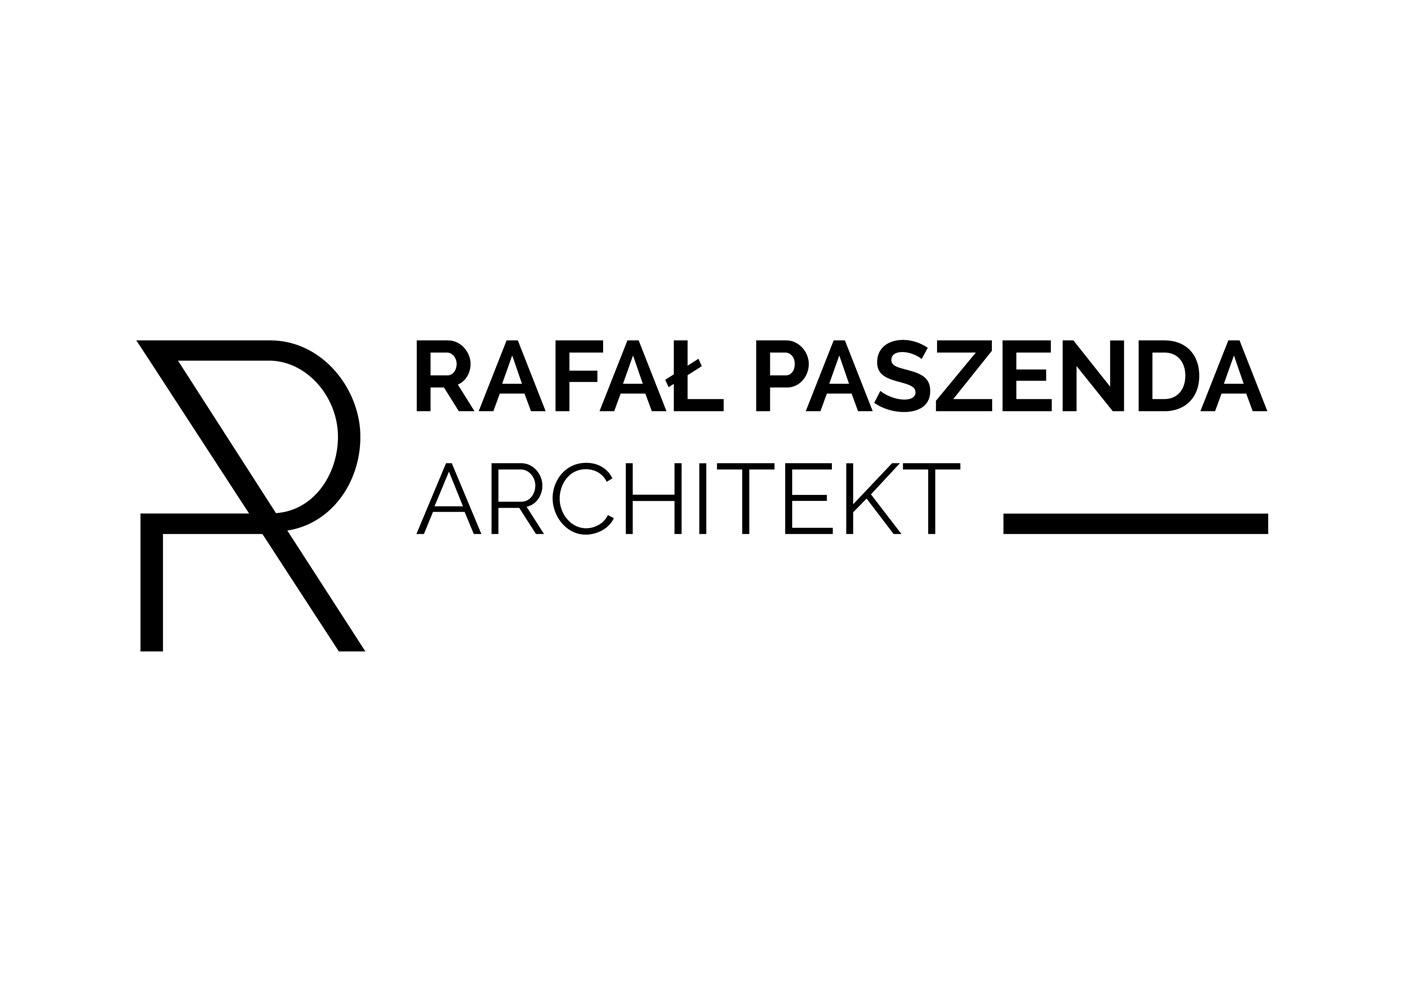 Rafał Paszenda